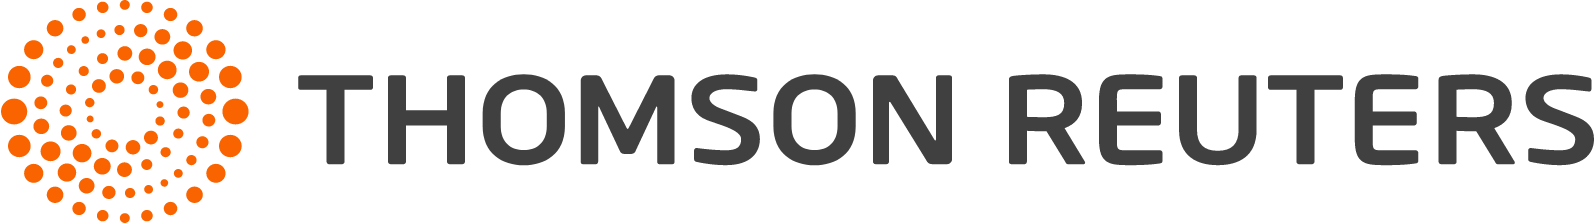 Thomson Reuters
 logo large (transparent PNG)